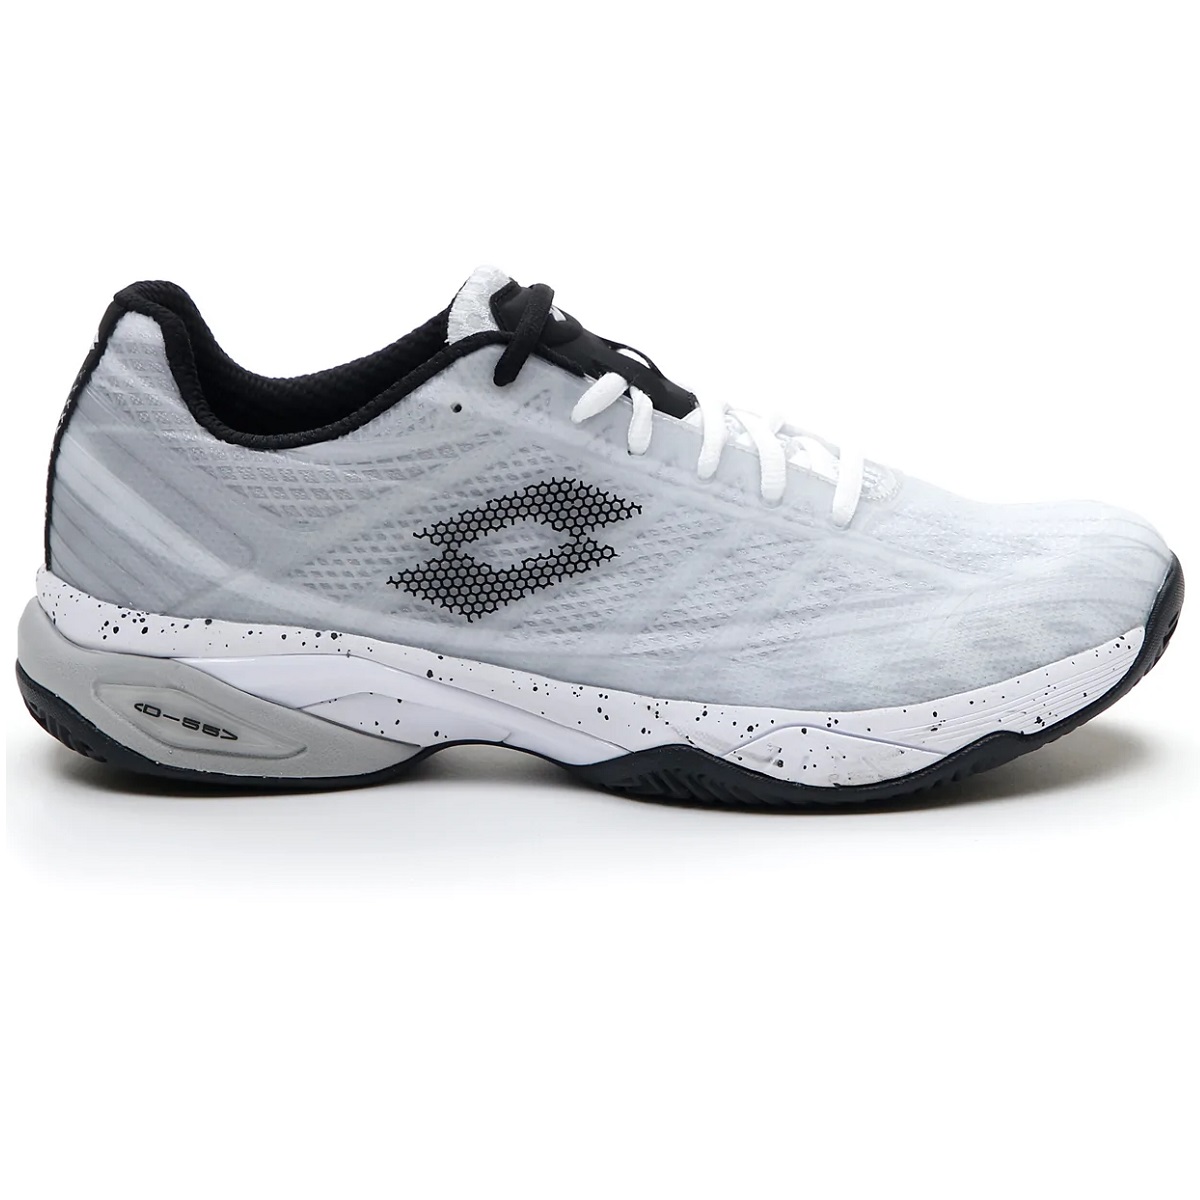 2021 Lowest Price] Lotto Vertigo Running Shoes For Men (black) Price in  India & Specifications